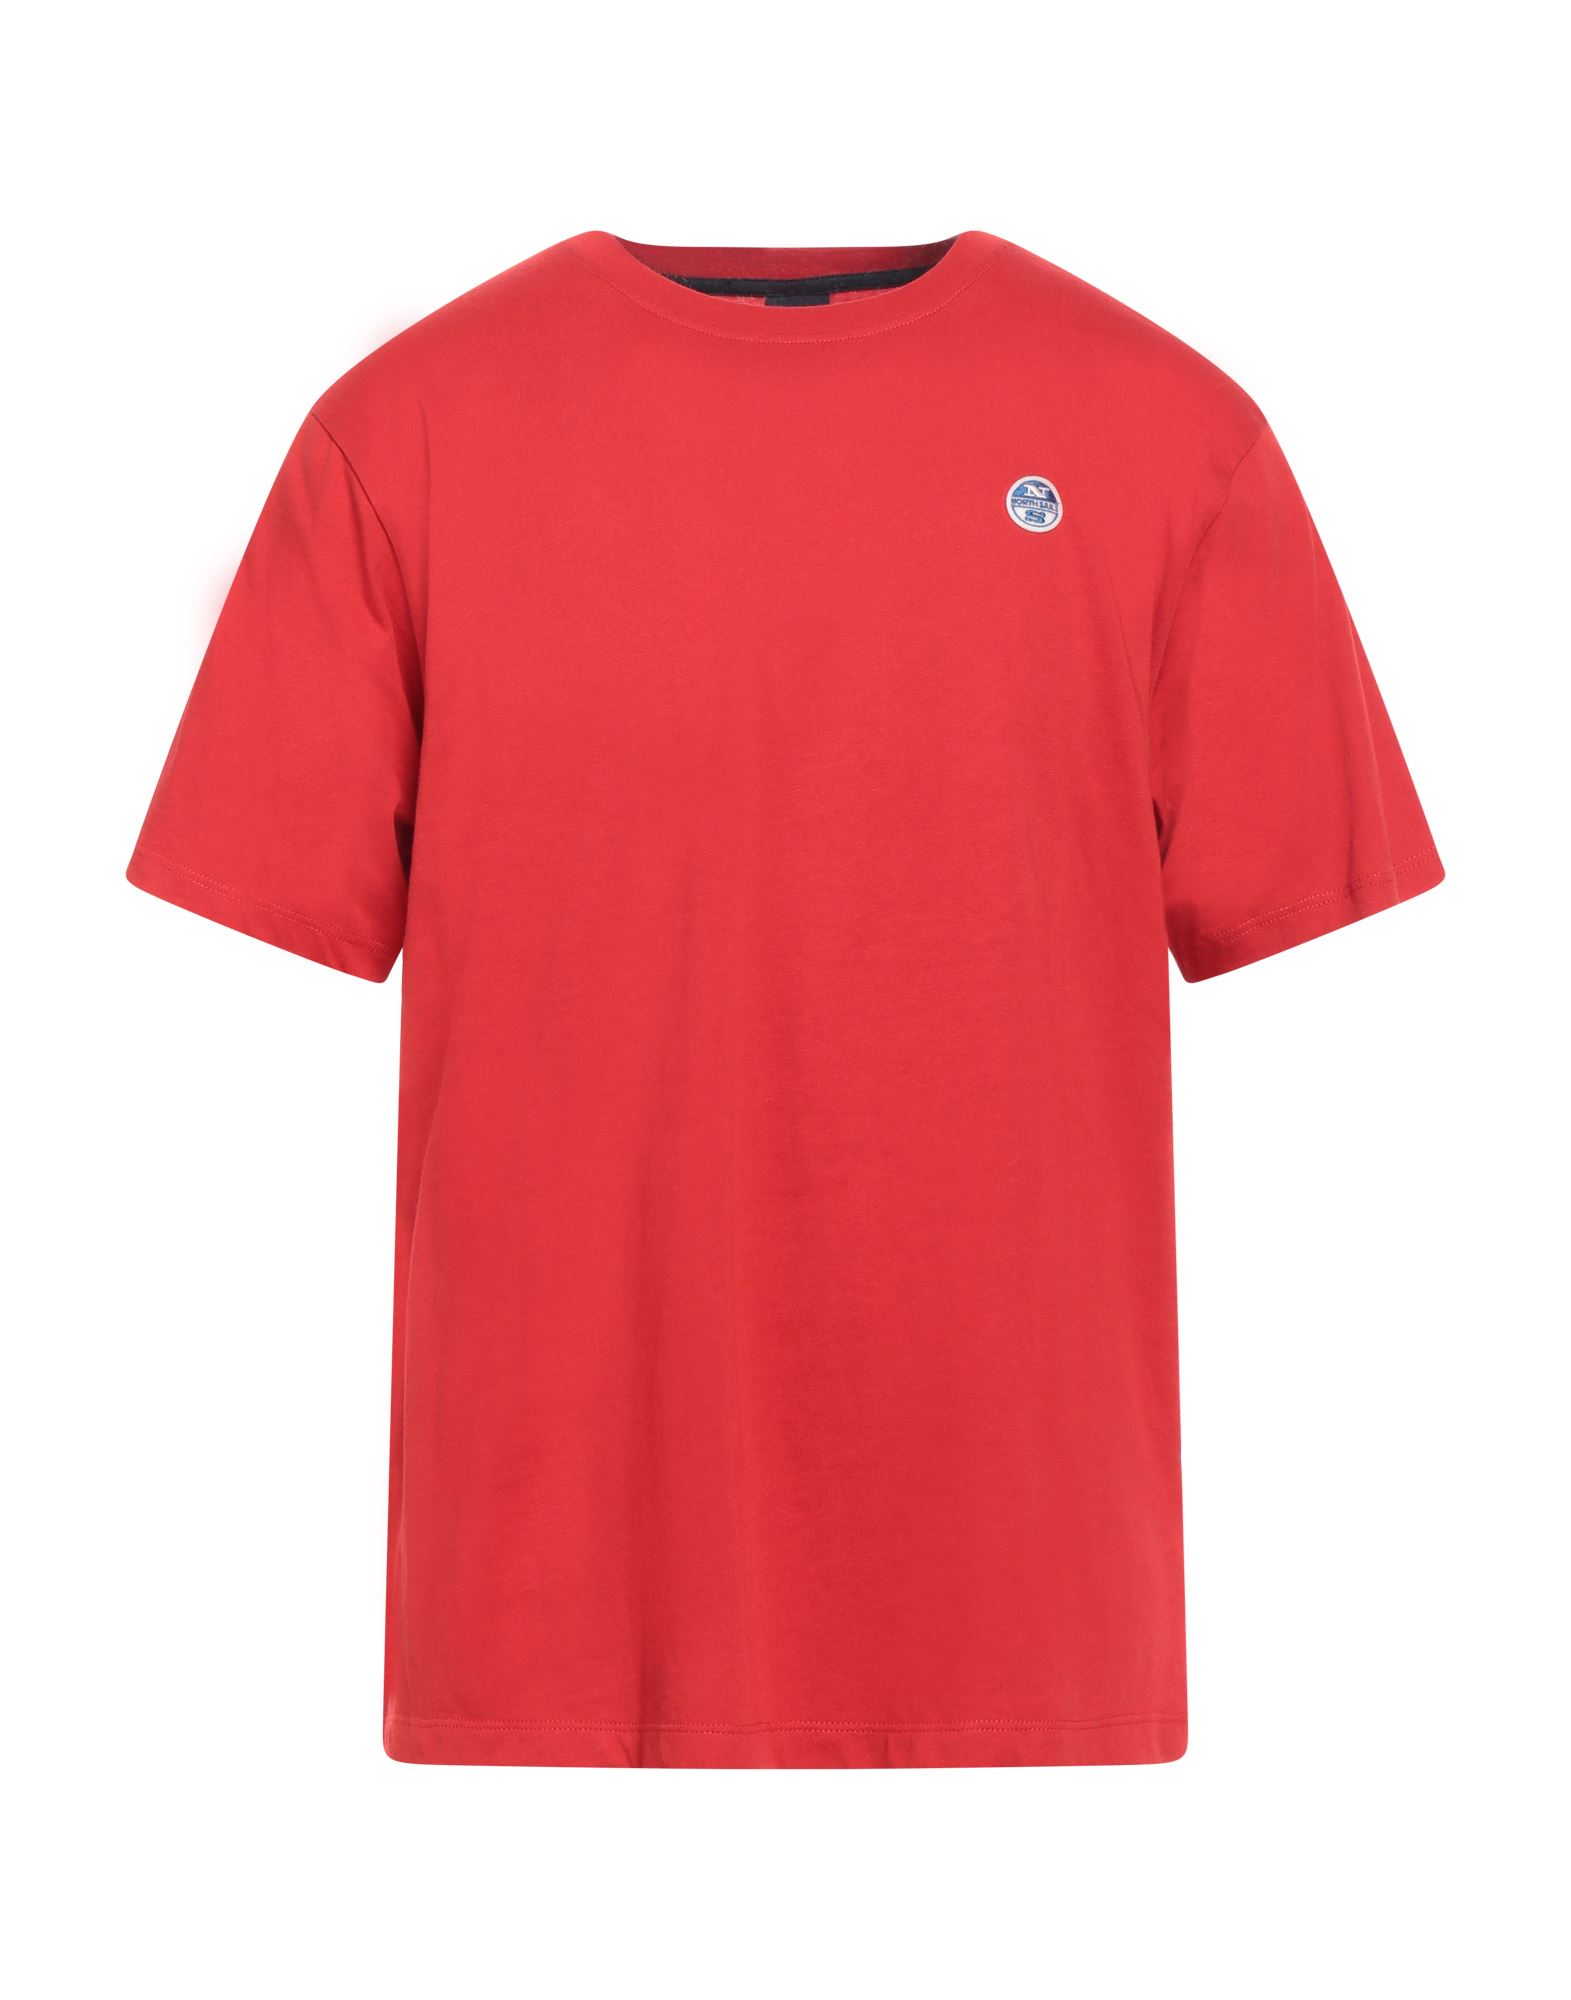 North Sails Man T-shirt Red Size Xxs Cotton